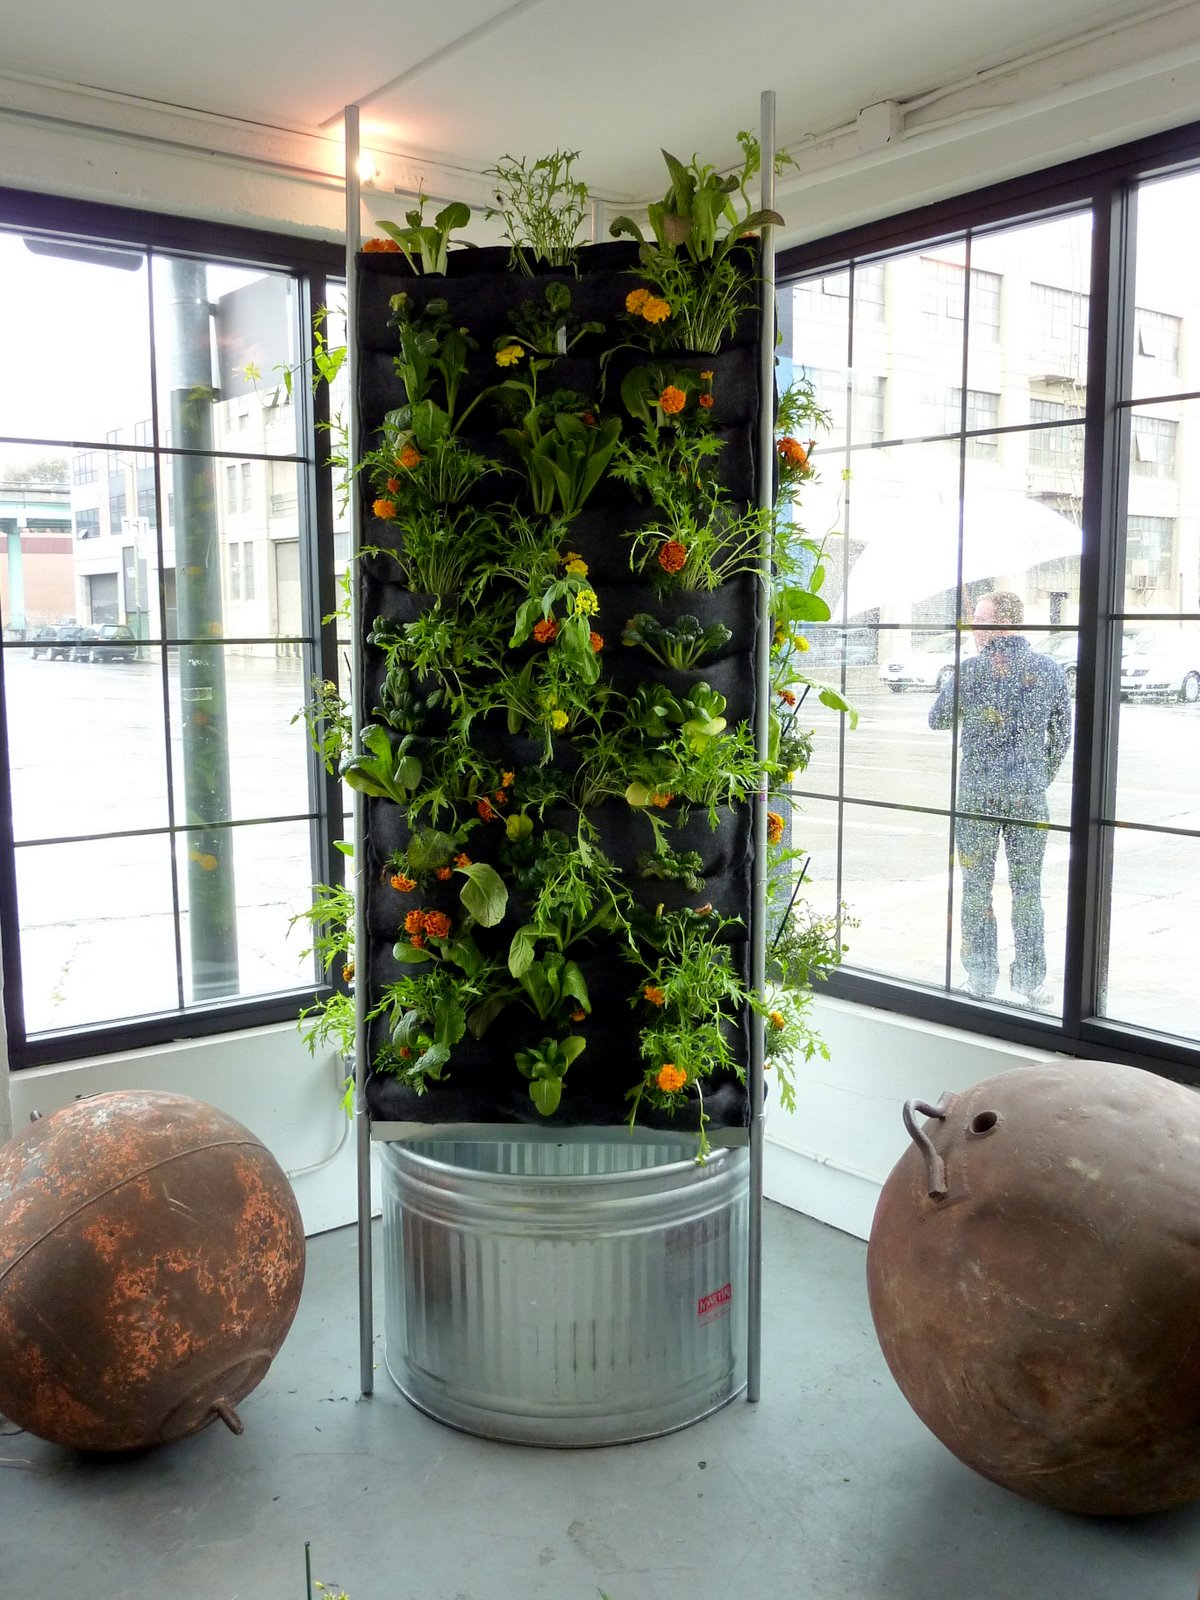  On Walls vertical garden systems: Aquaponic Vertical Vegetable Garden